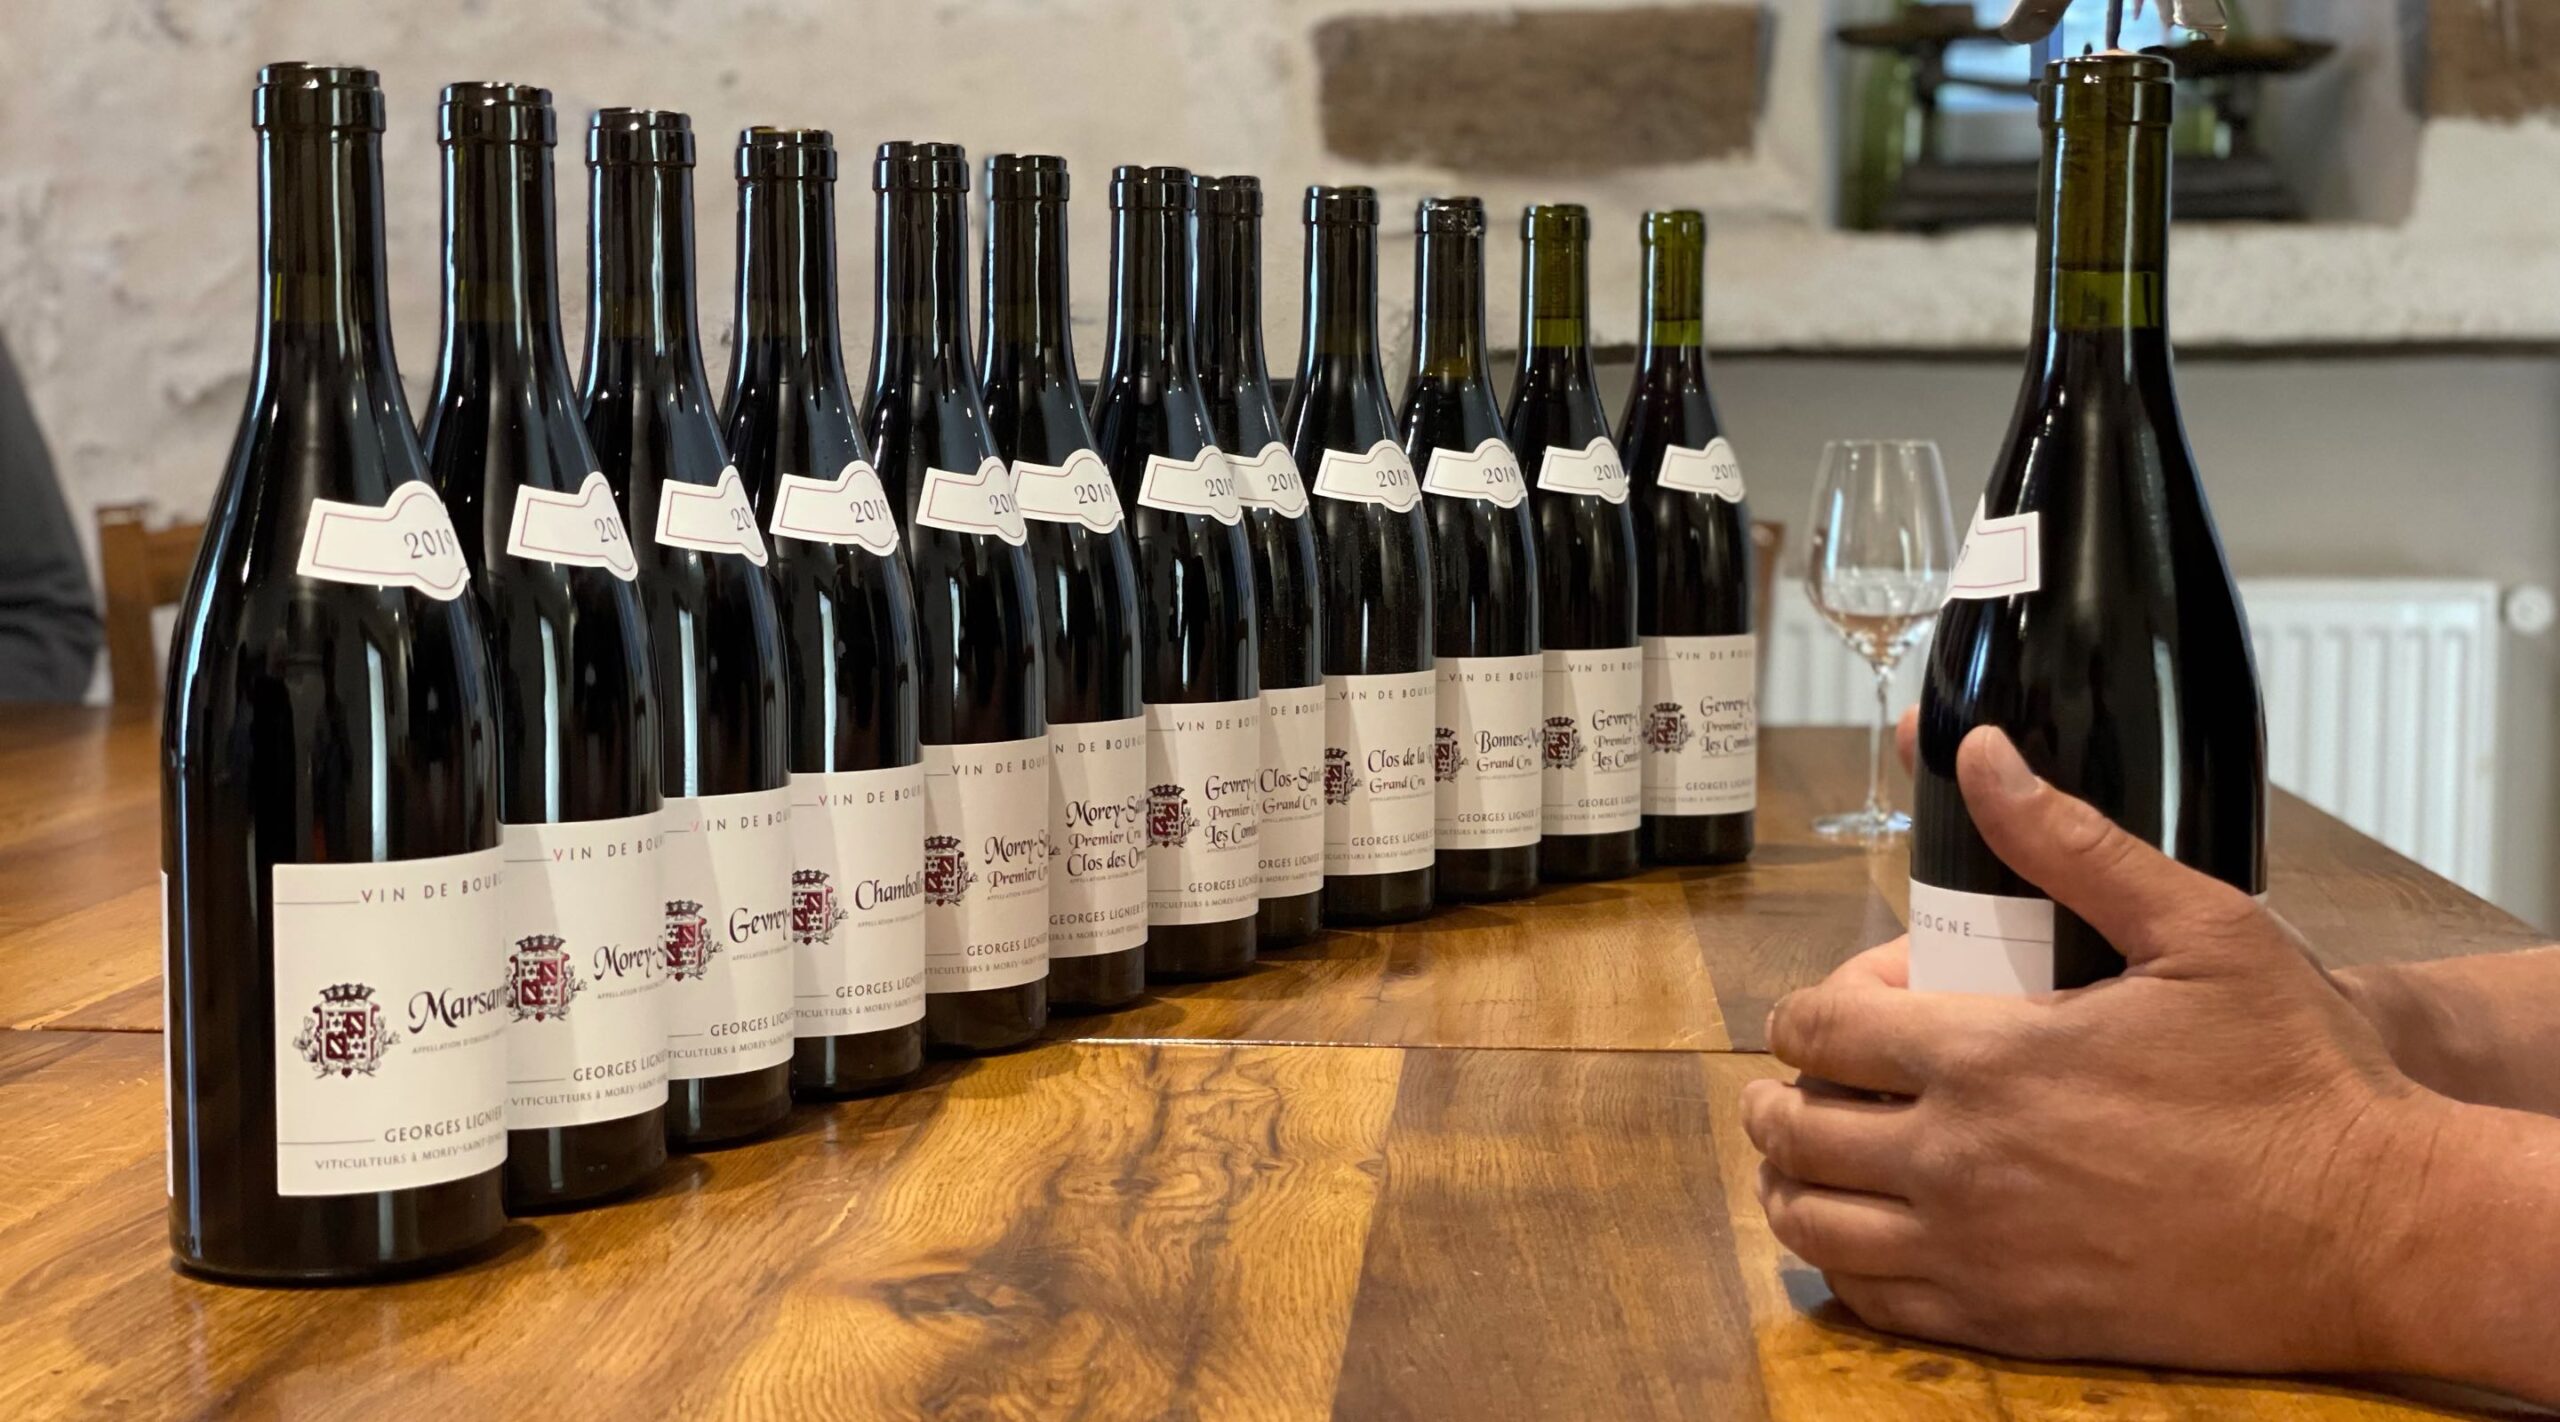 Domaine Georges Lignier bottles of wine